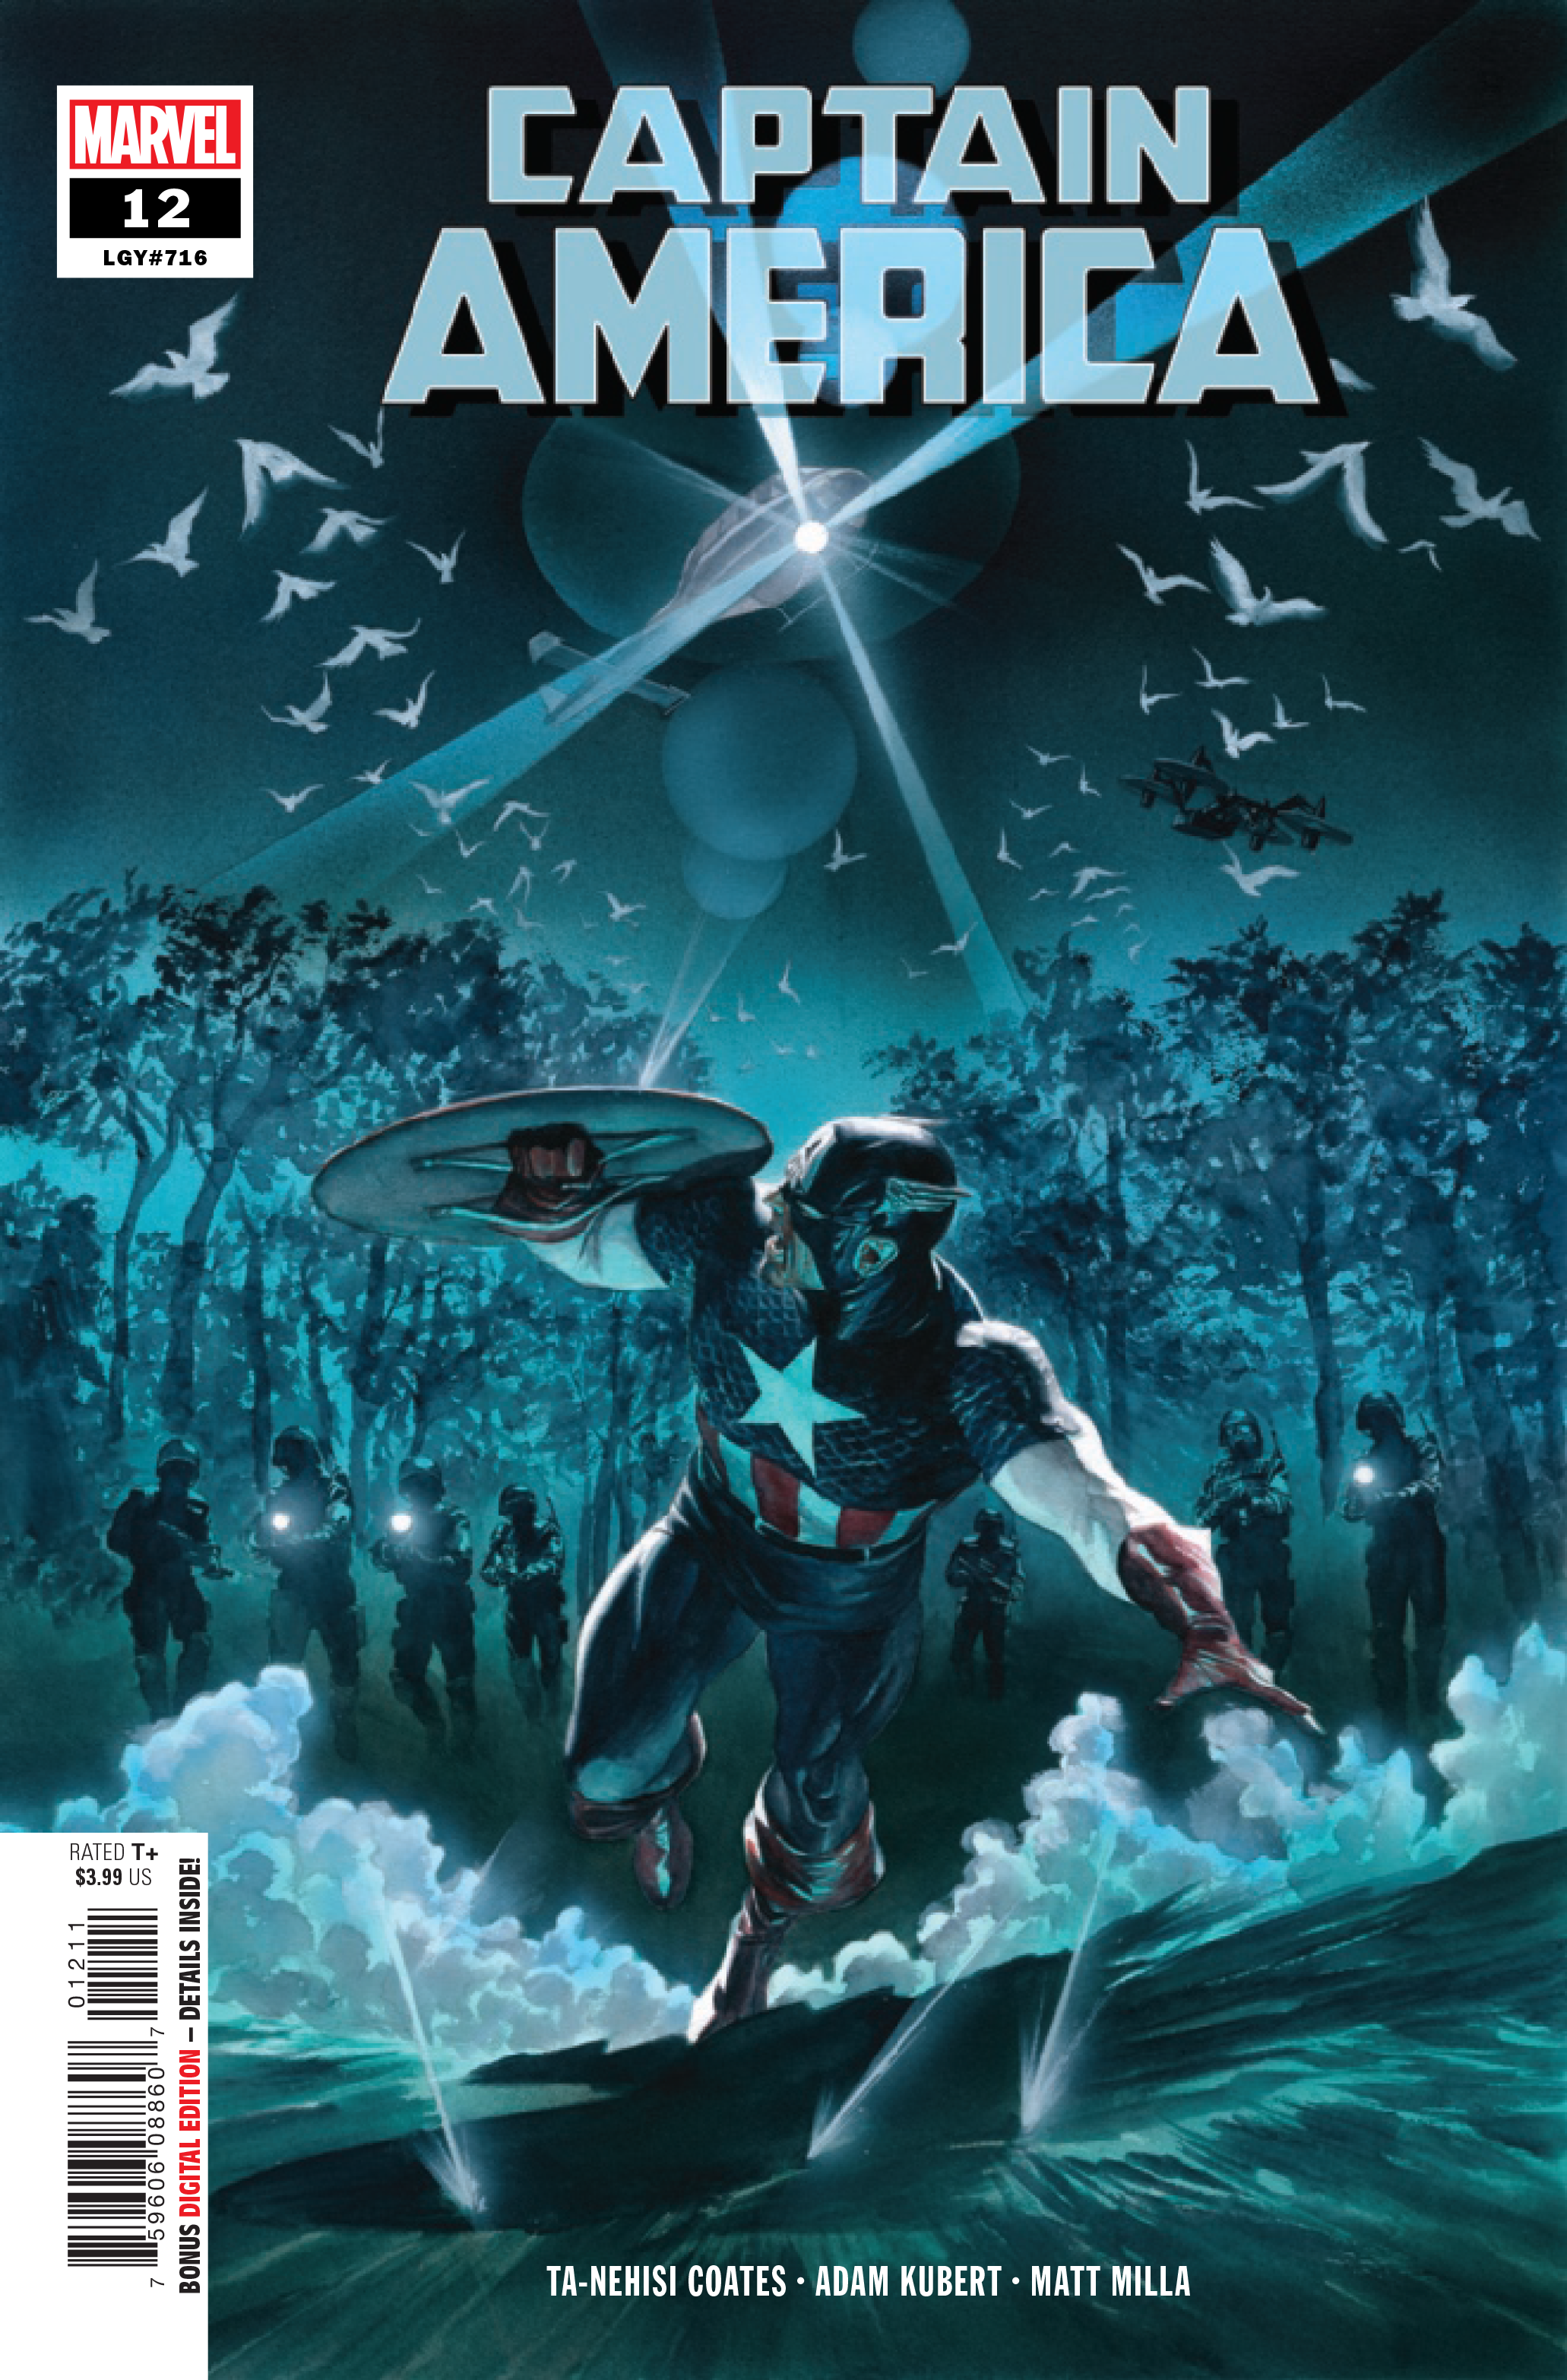 Captain America #12 cover art